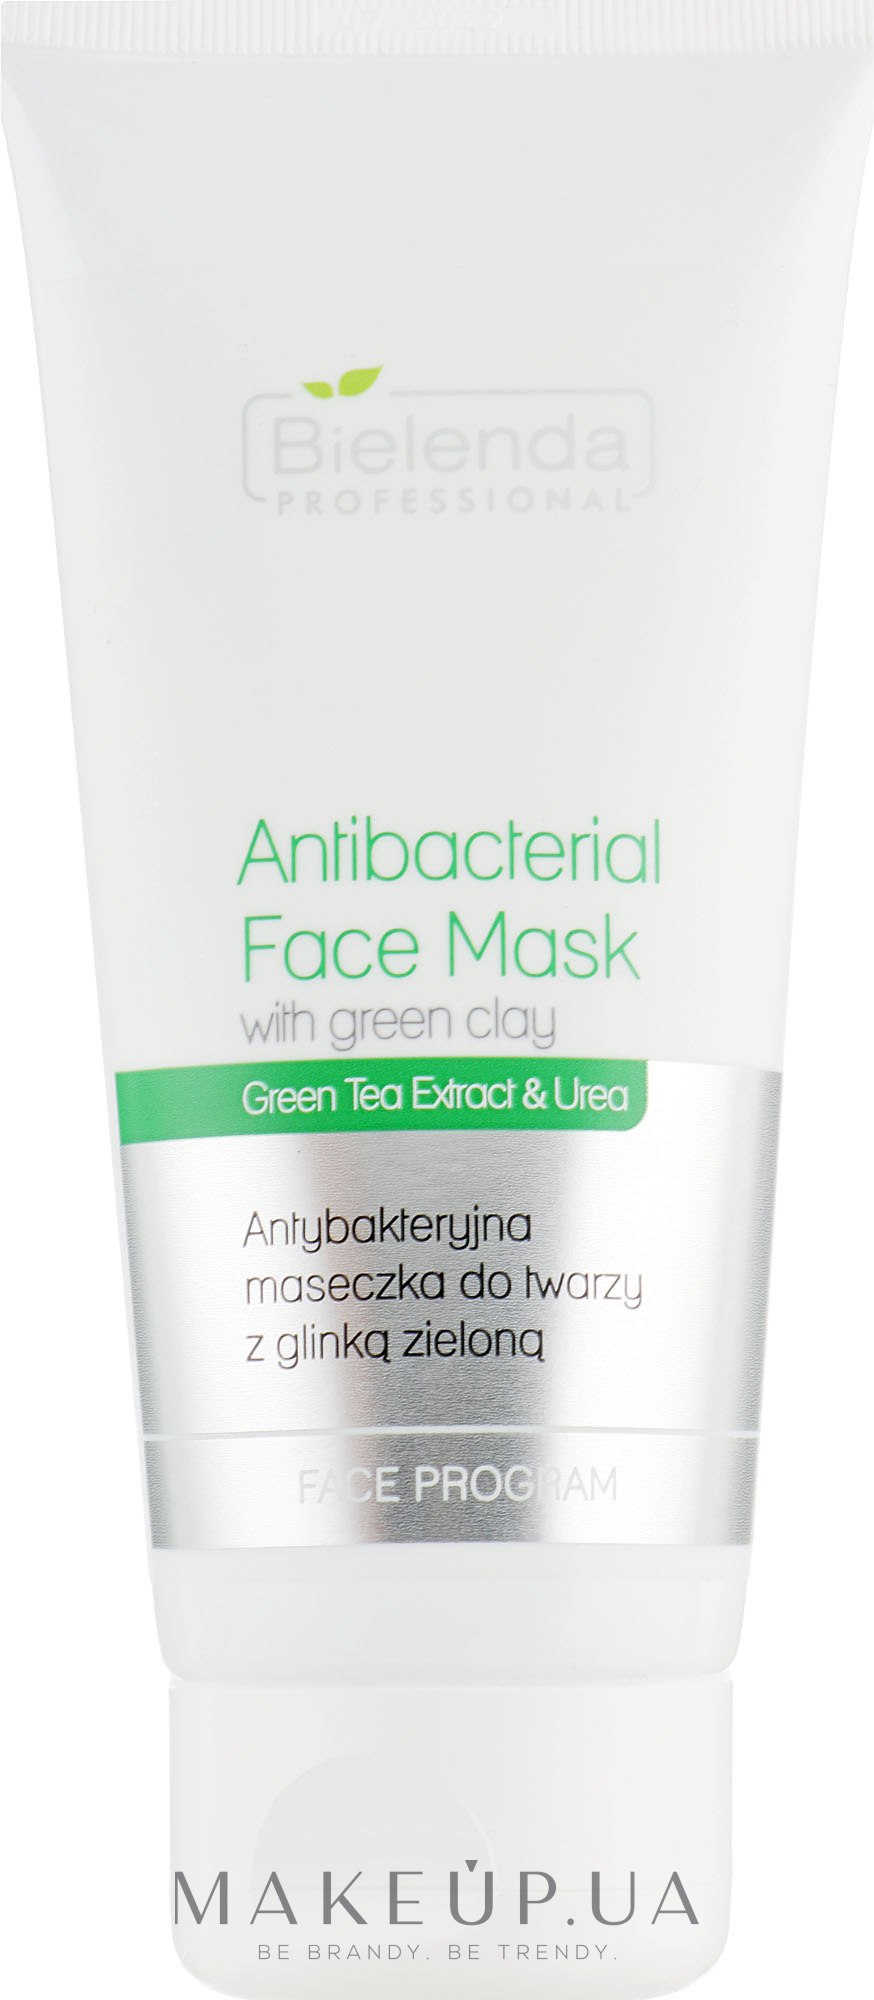 Антибактеріальна маска з зеленою глиною глиною - Bielenda Professional Face Program Antibacterial Face Mask with Green Clay — фото 150g